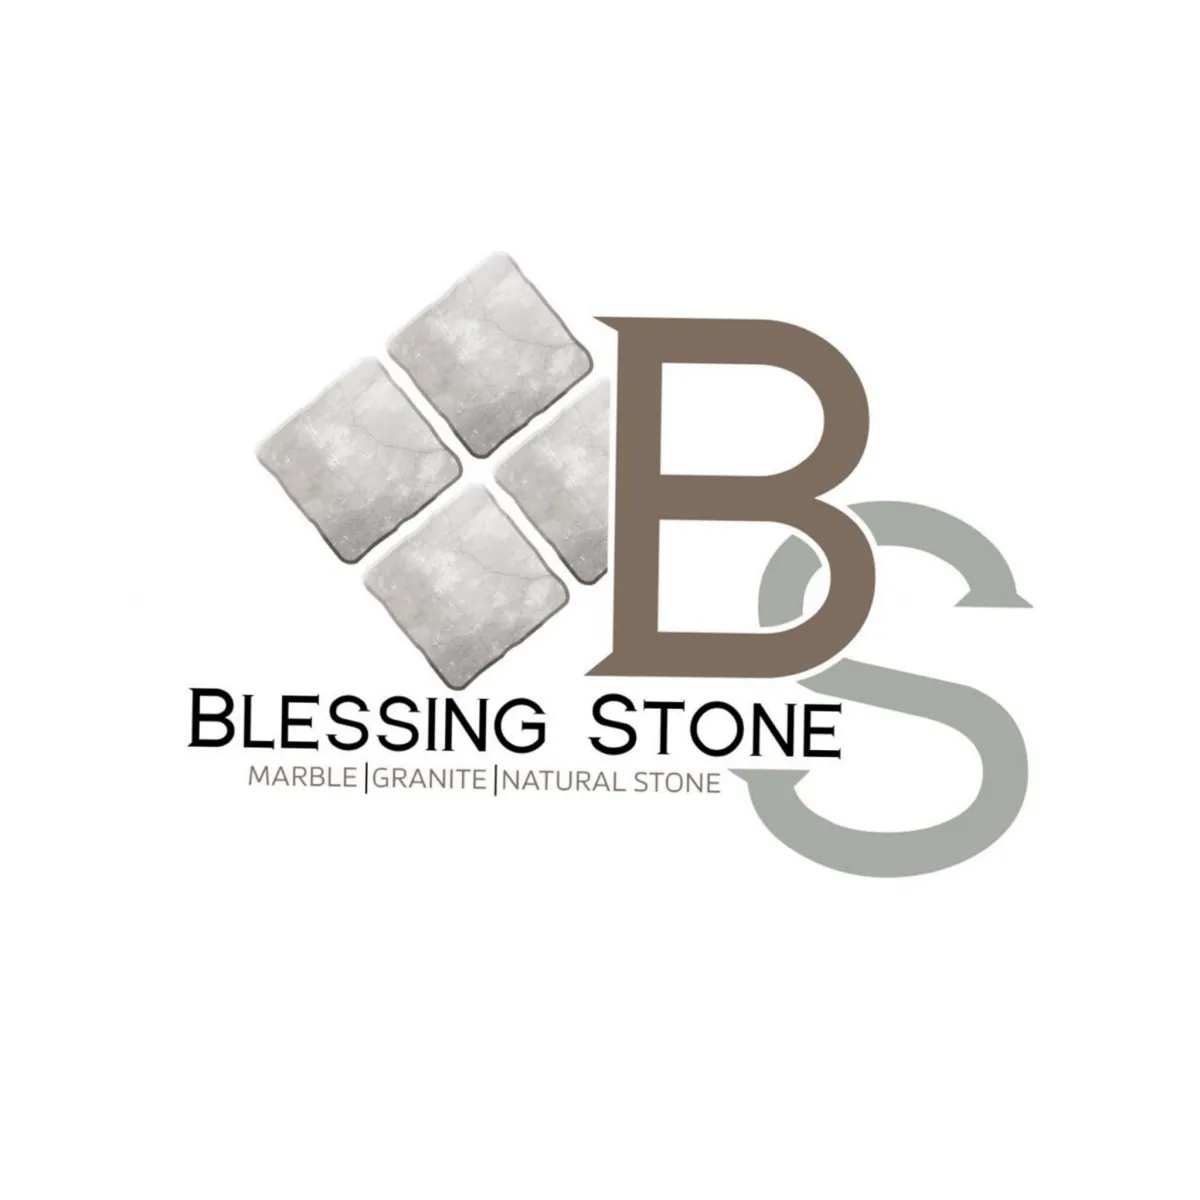 Blessing Stone LLC Brand Logo